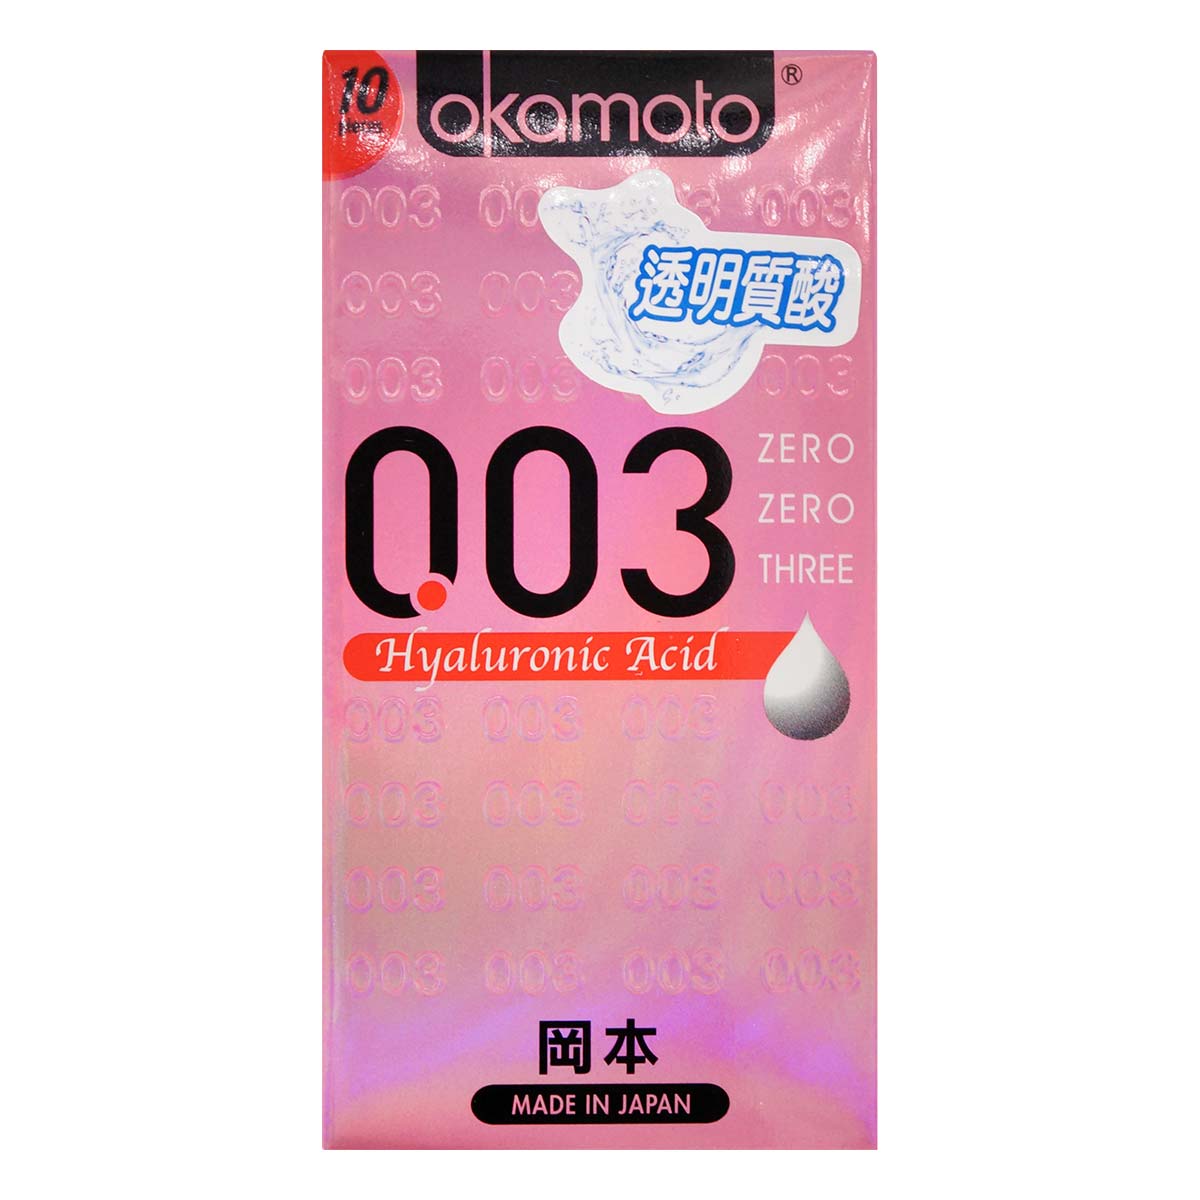 Okamoto 0.03 Hyaluronic acid 10's Pack Latex Condom-p_2